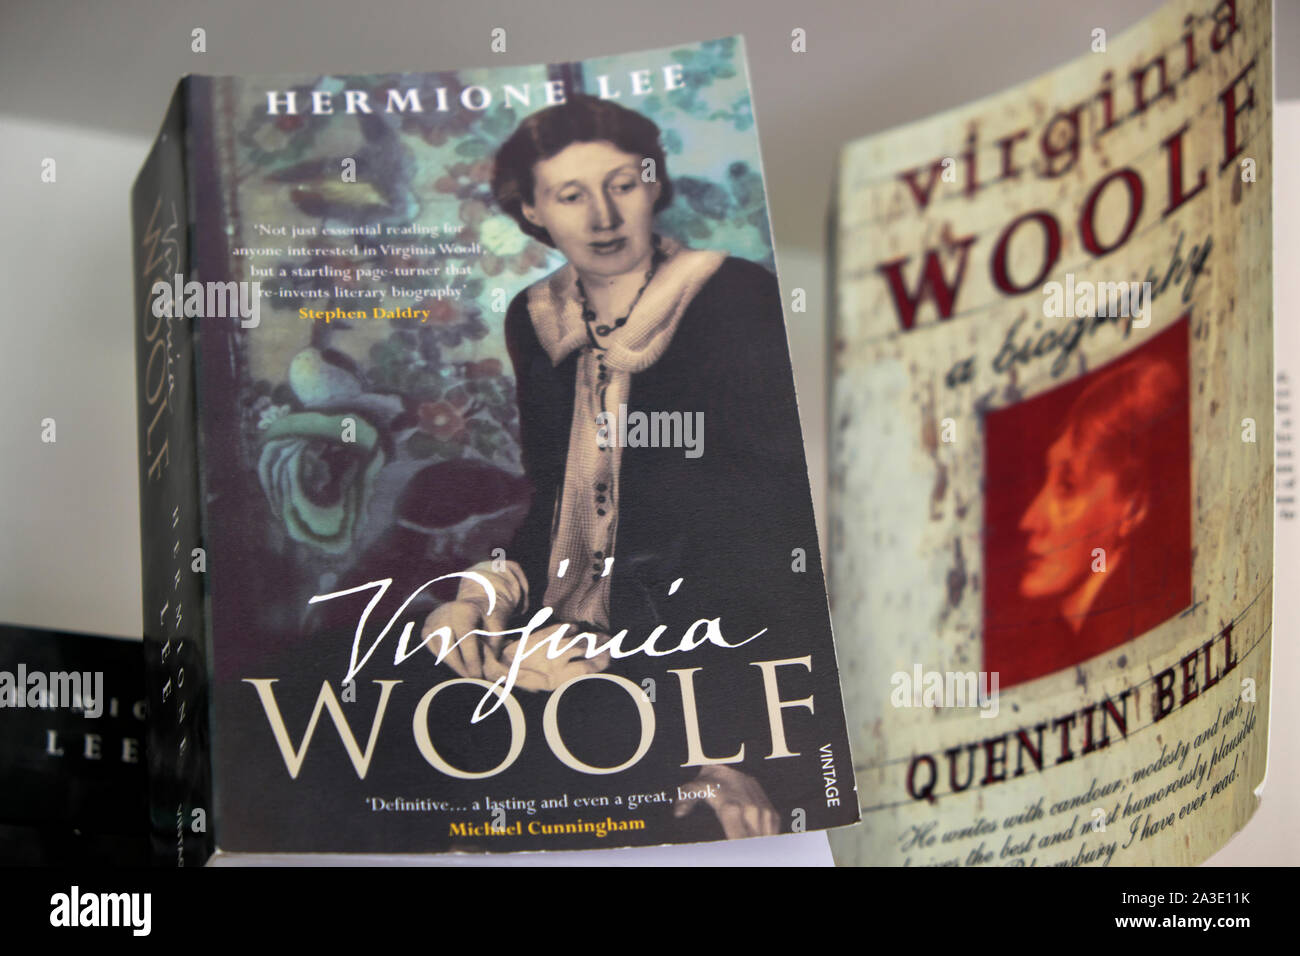 British autore Virginia Woolf autobiografia libri di Hermione Lee & Quentin Bell per la copertina del libro Londra Inghilterra KATHY DEWITT Foto Stock